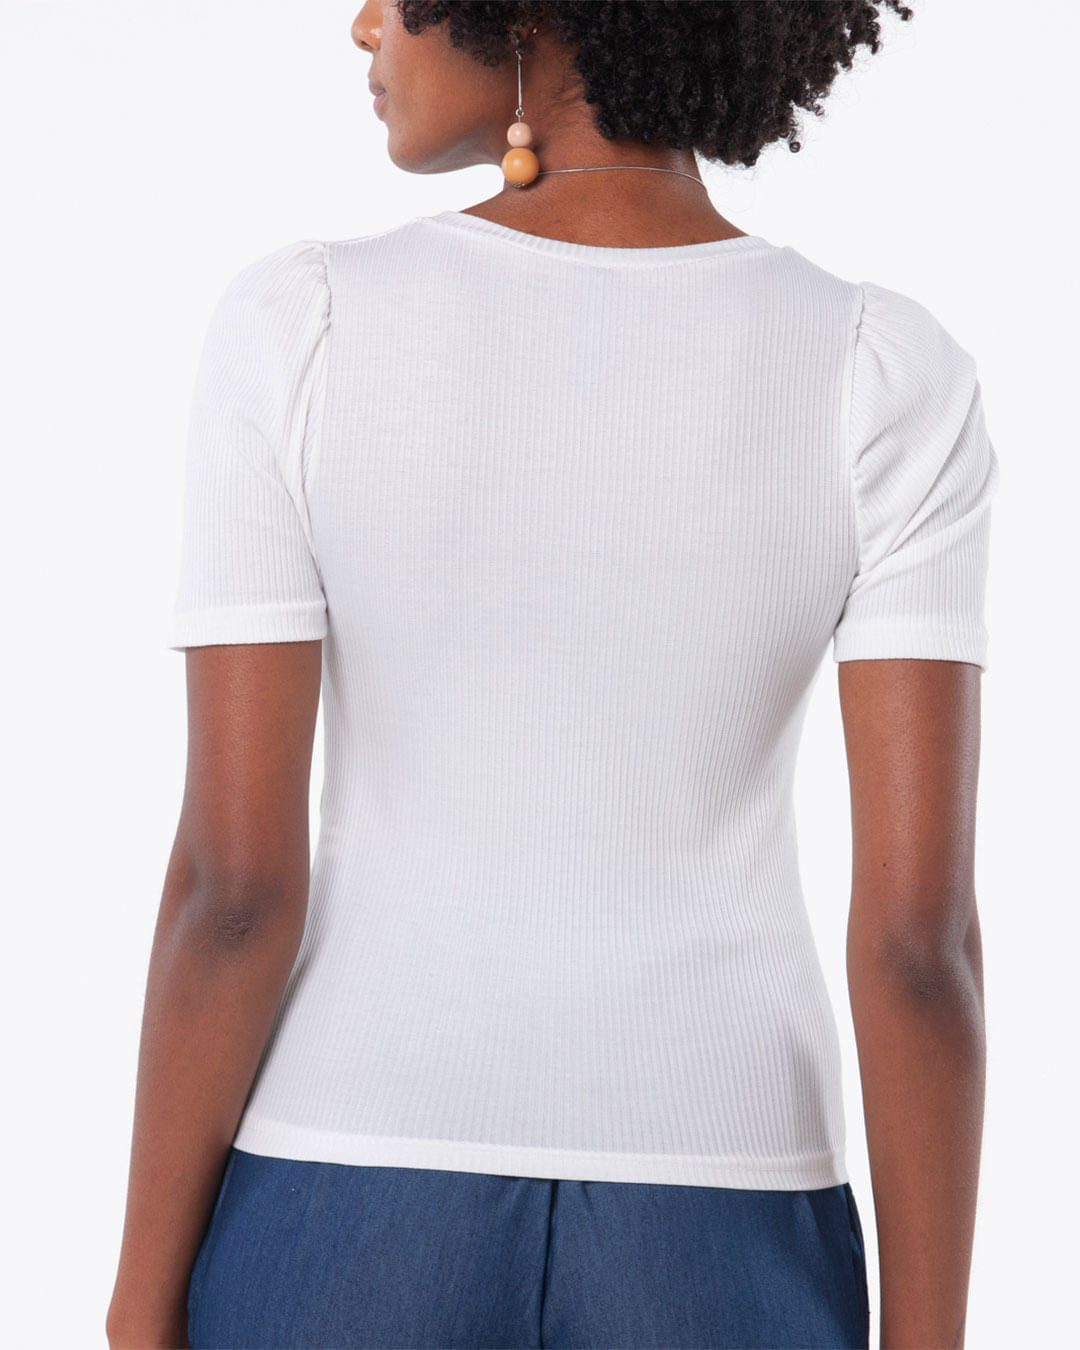 Camiseta-Feminina-Lisa-Malha-Canelada-Manga-Bufante-Branco